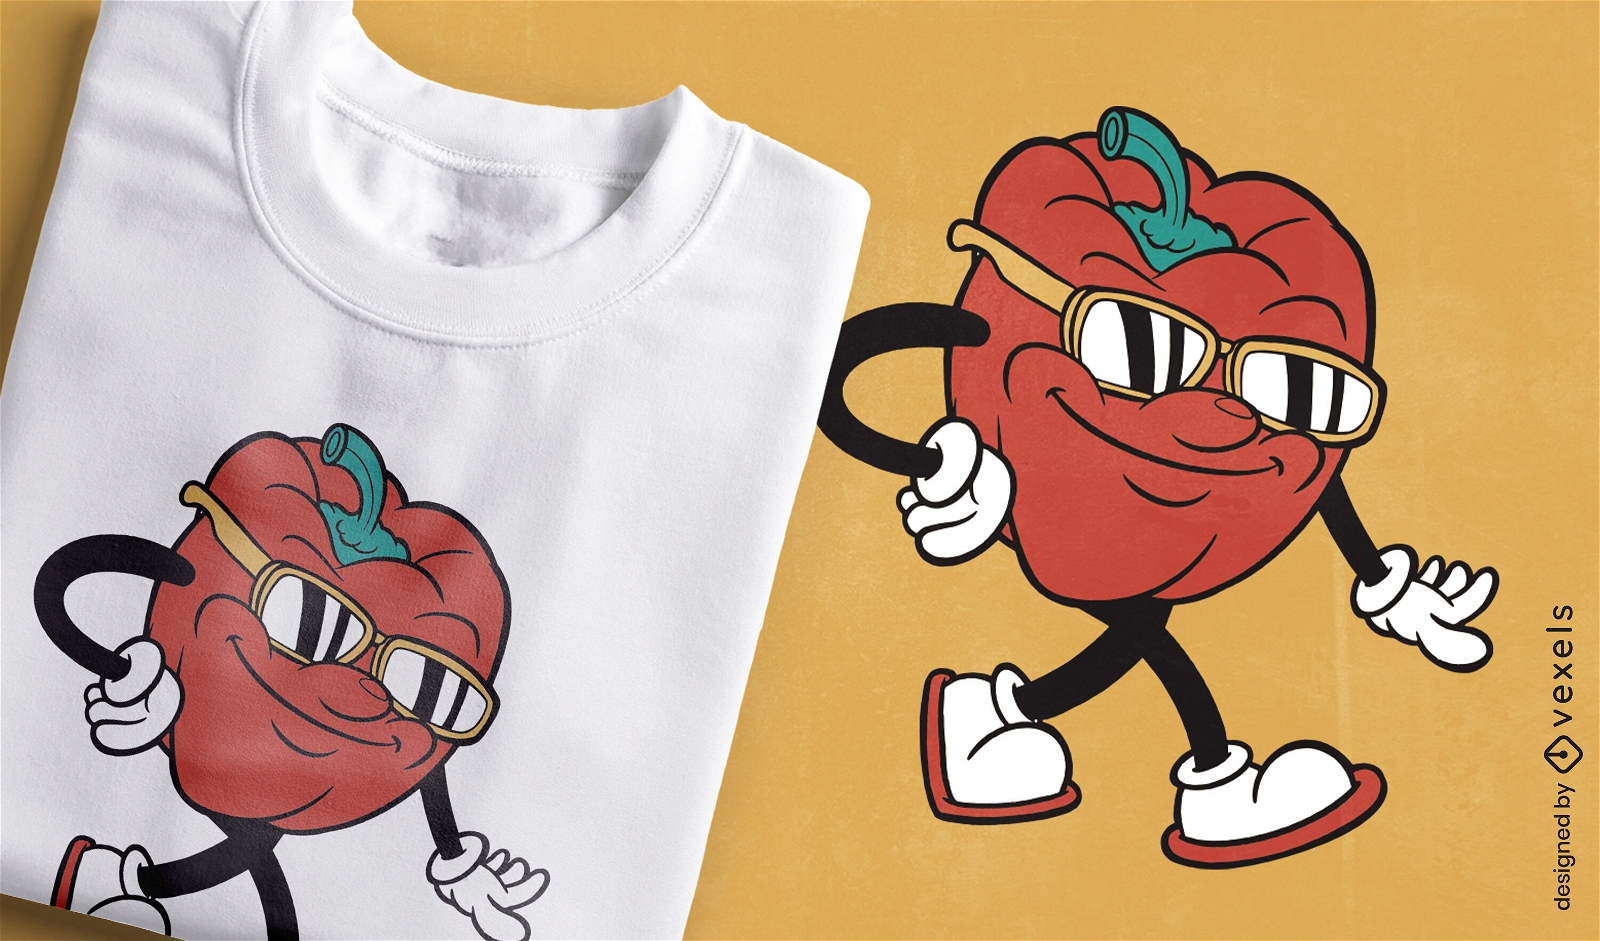 Lebensmittelkarikatur-T-Shirt Entwurf der roten Paprika